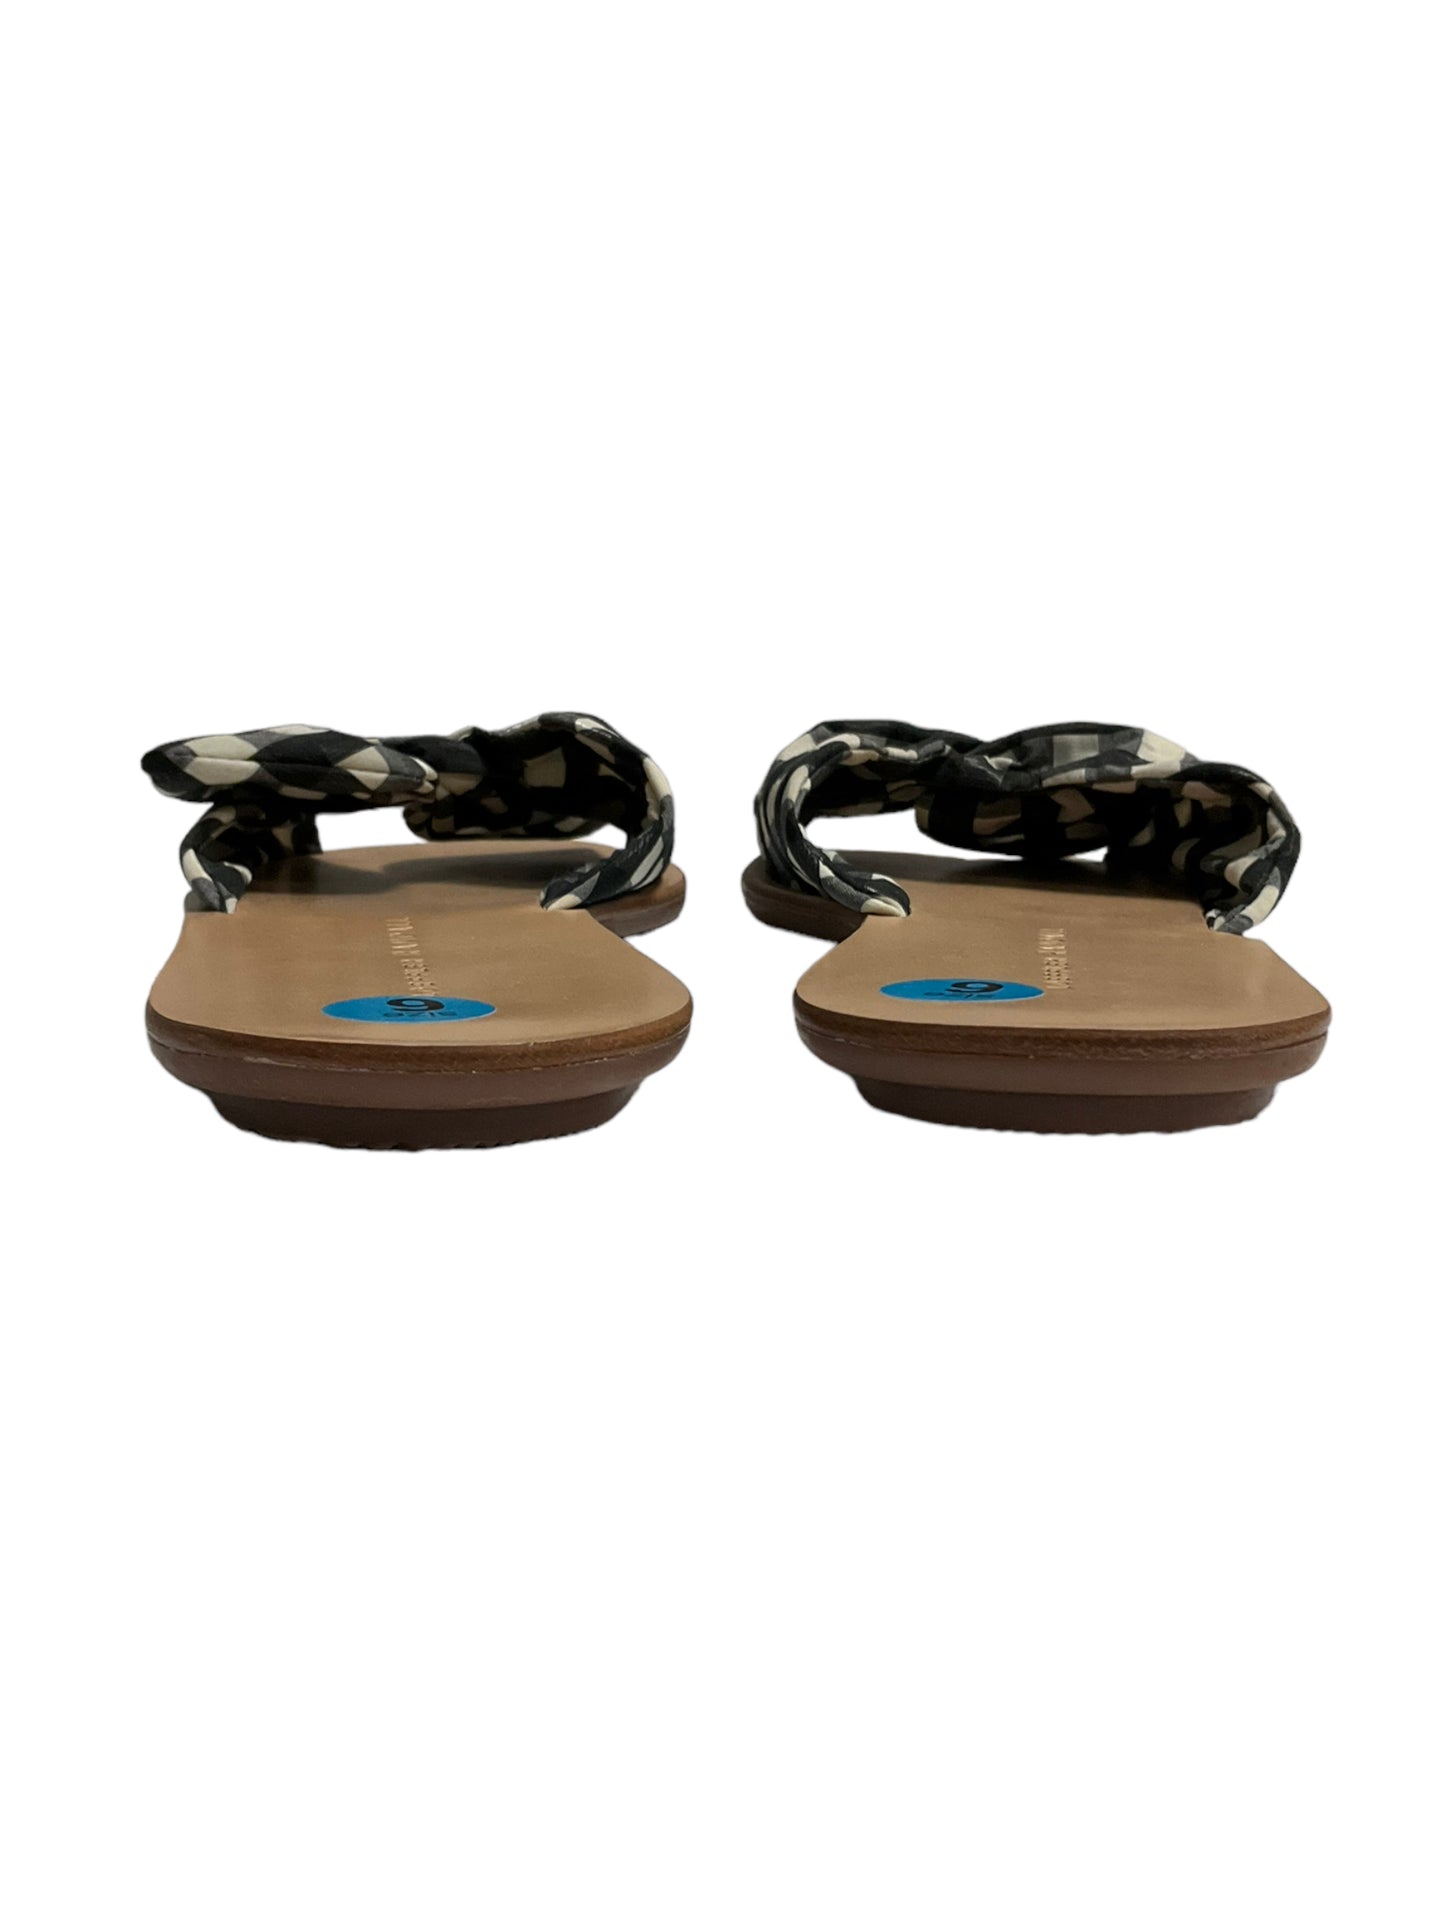 Sandals Flats By Loeffler Randall  Size: 6